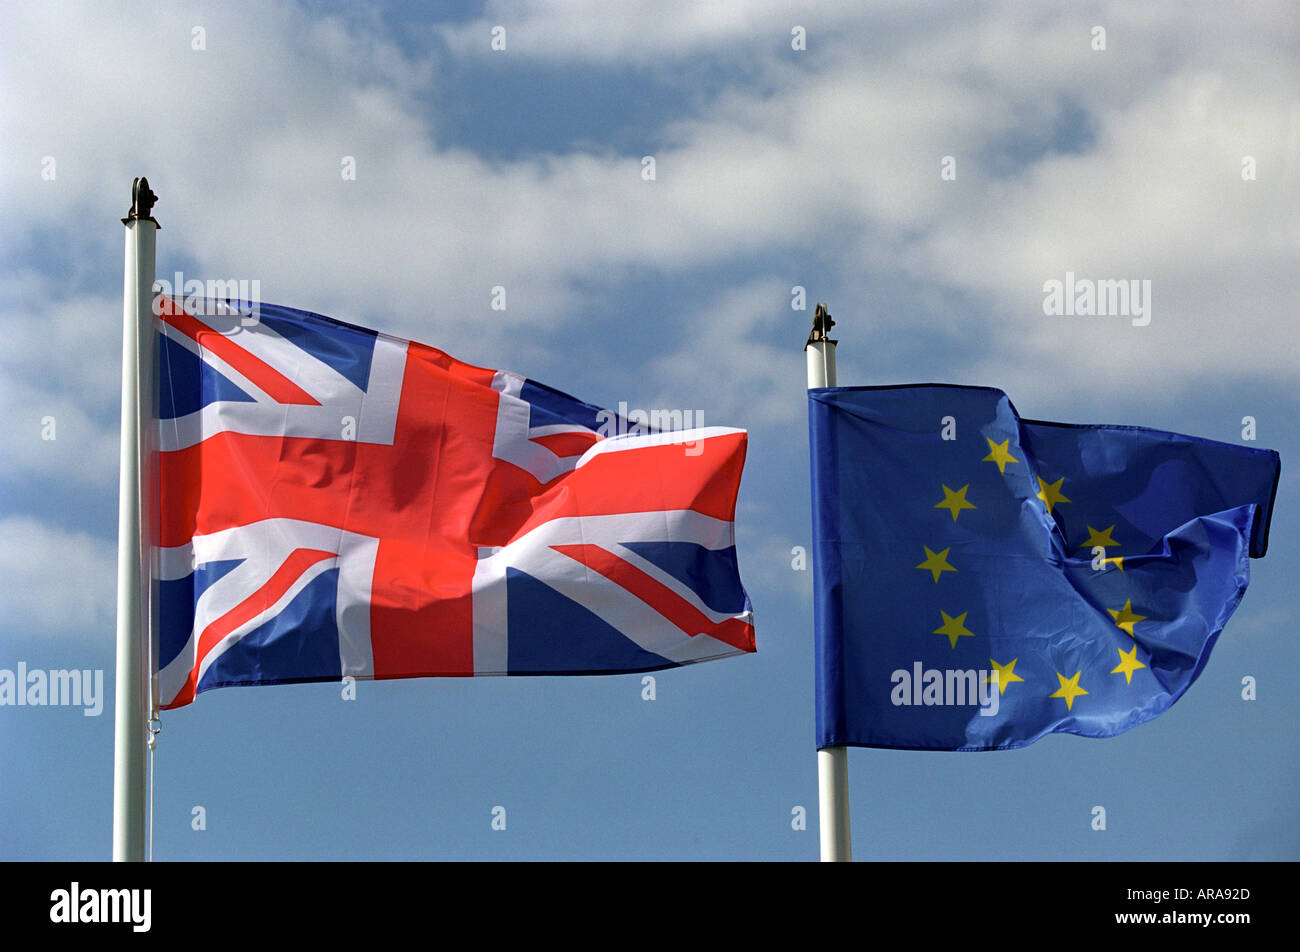 A United Kingdom flag flying next to a European Union flag Stock Photo